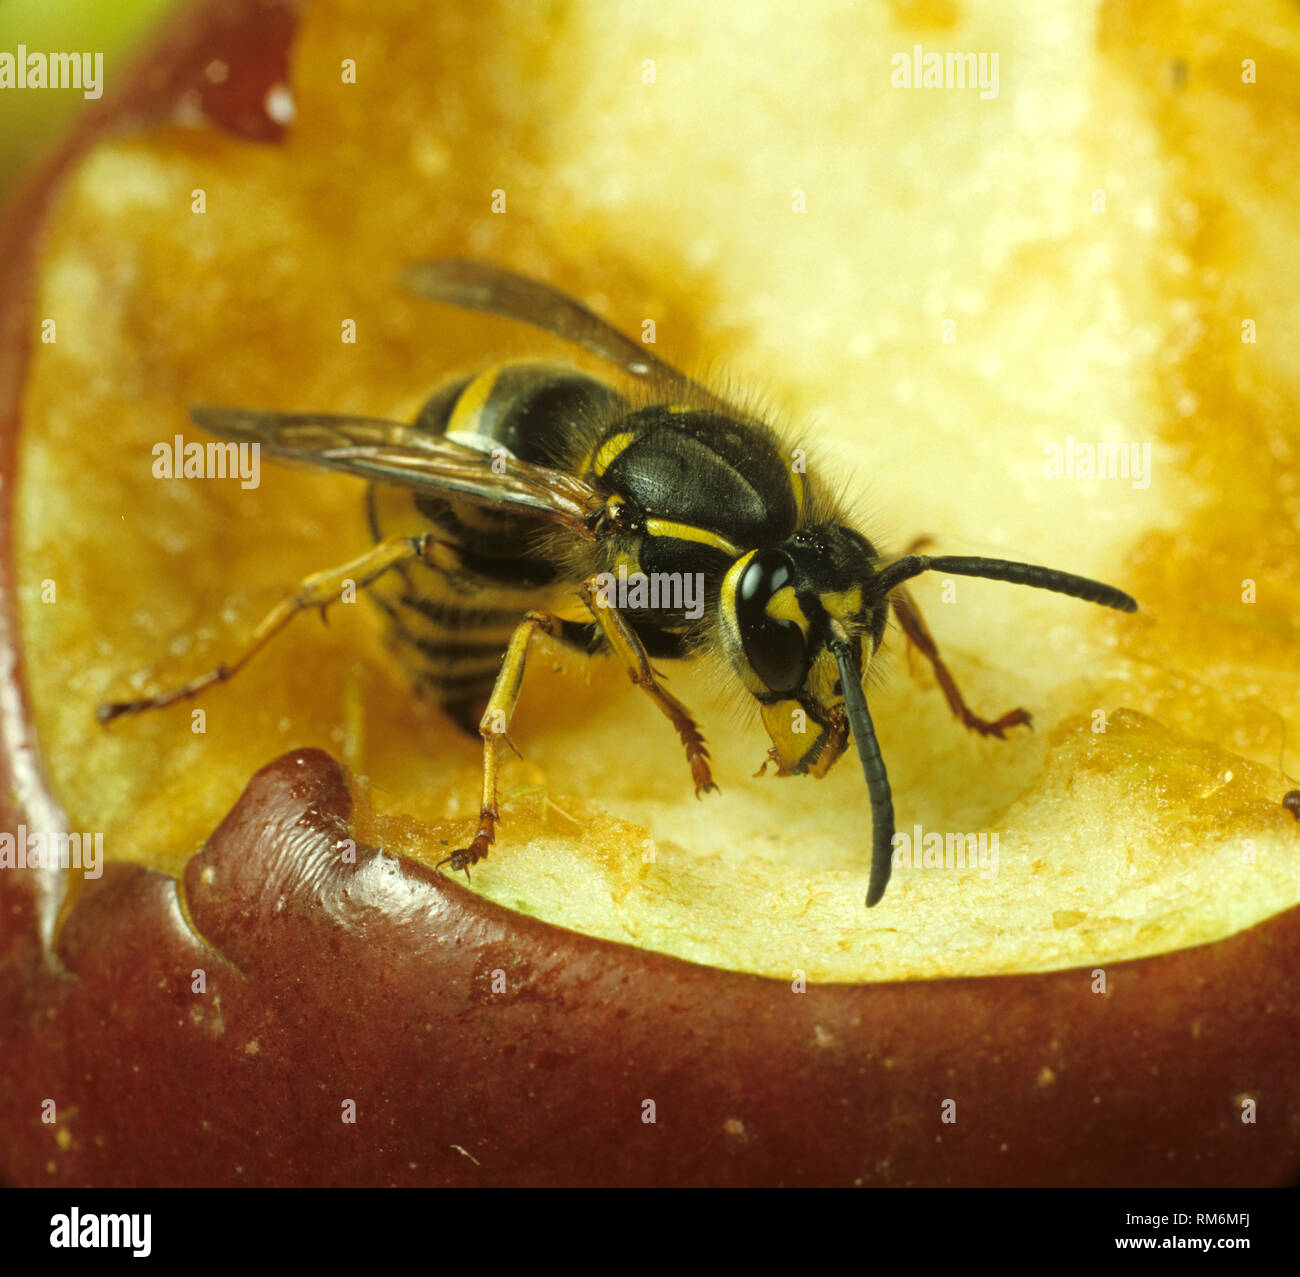 Common wasp (Vespula vulgaris) adult on a damaged apple fruit Stock Photo